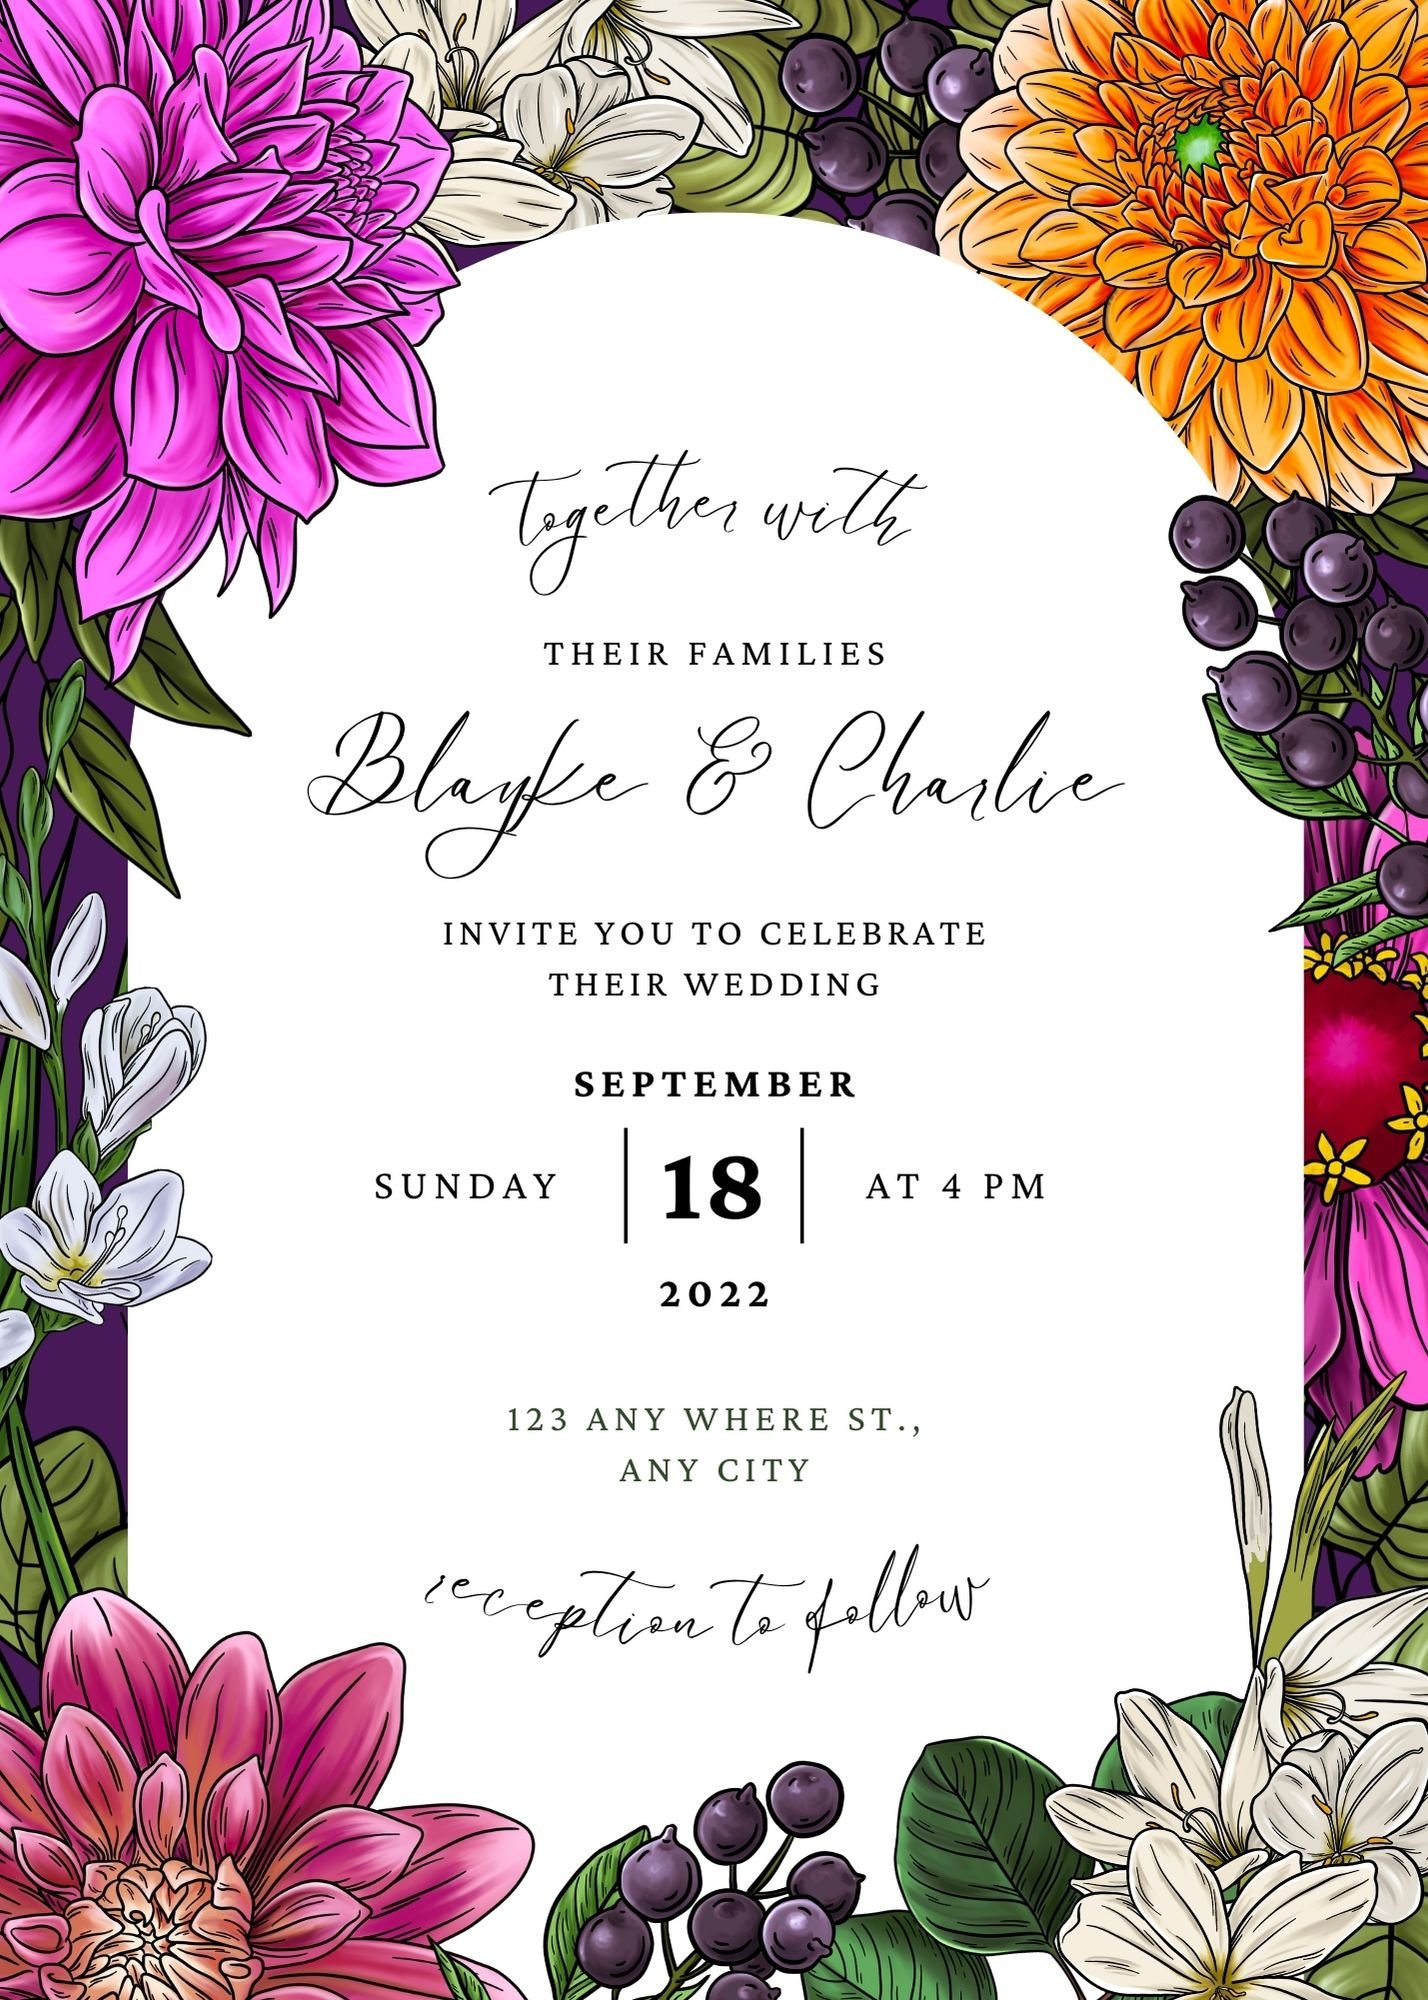 Colorful Floral Illustration Wedding Invitation.jpg